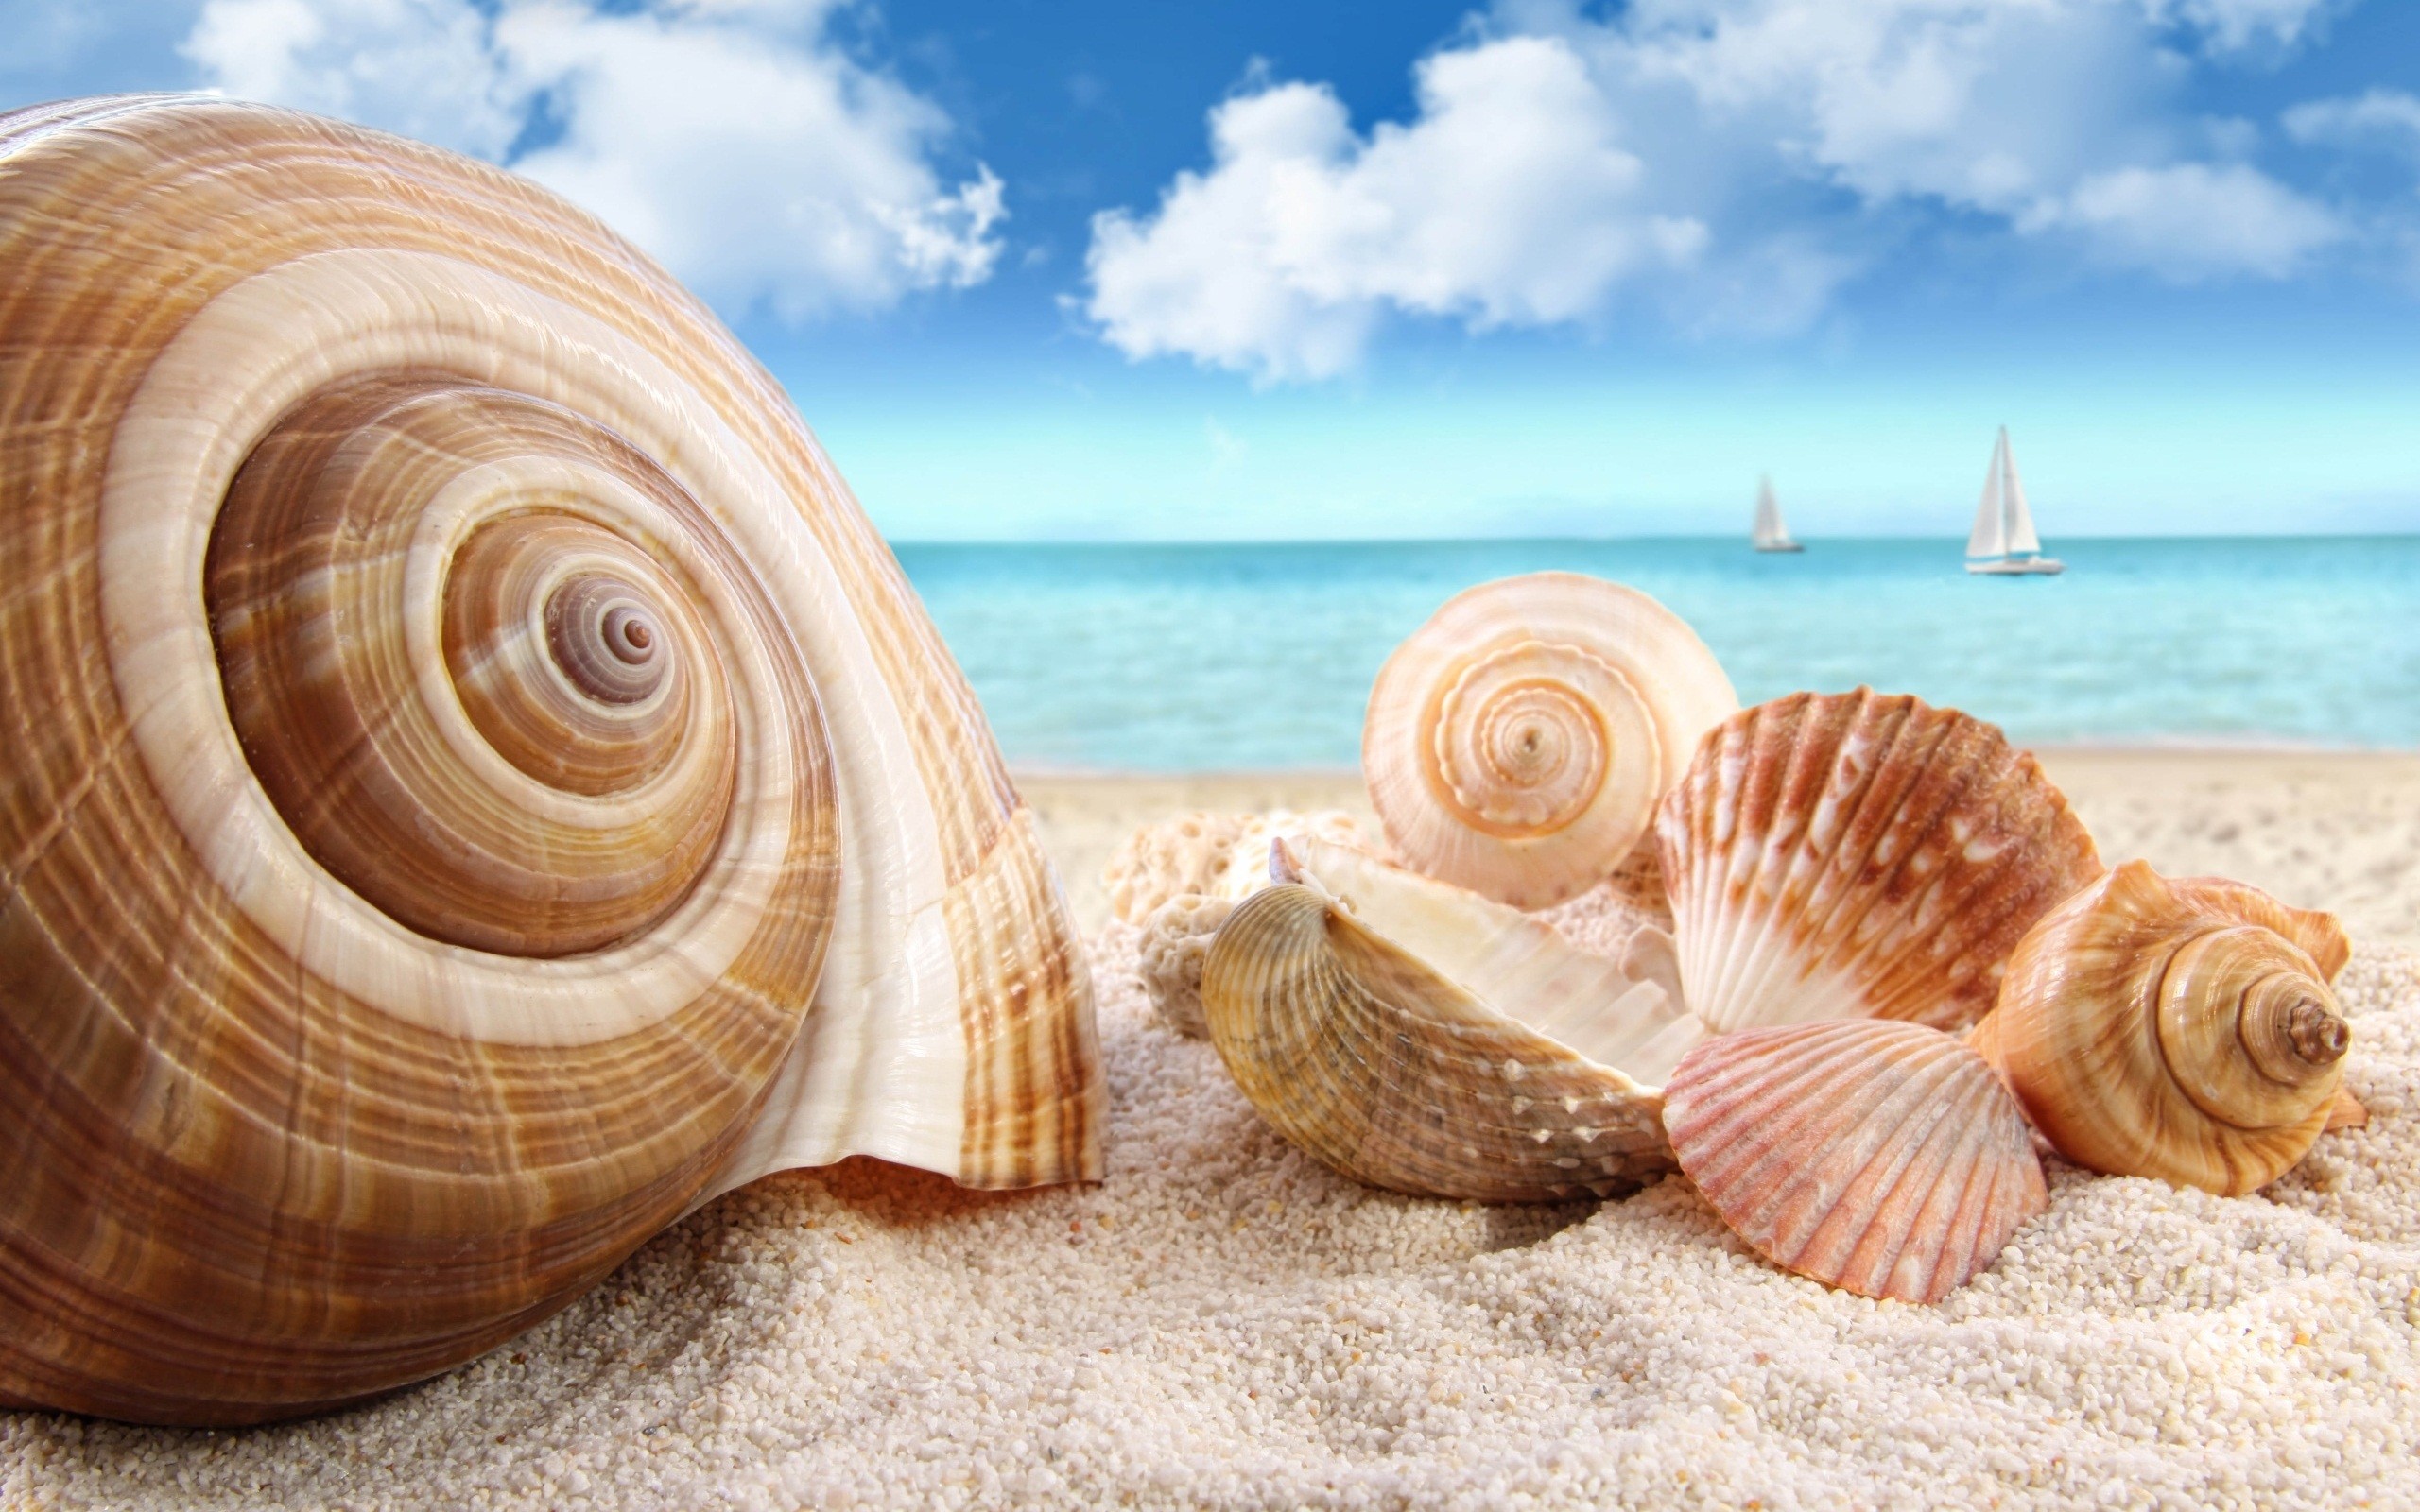 2560x1600 Download wallpaper: sea , download photo, Beach, , sand, sand beach  wallpaper